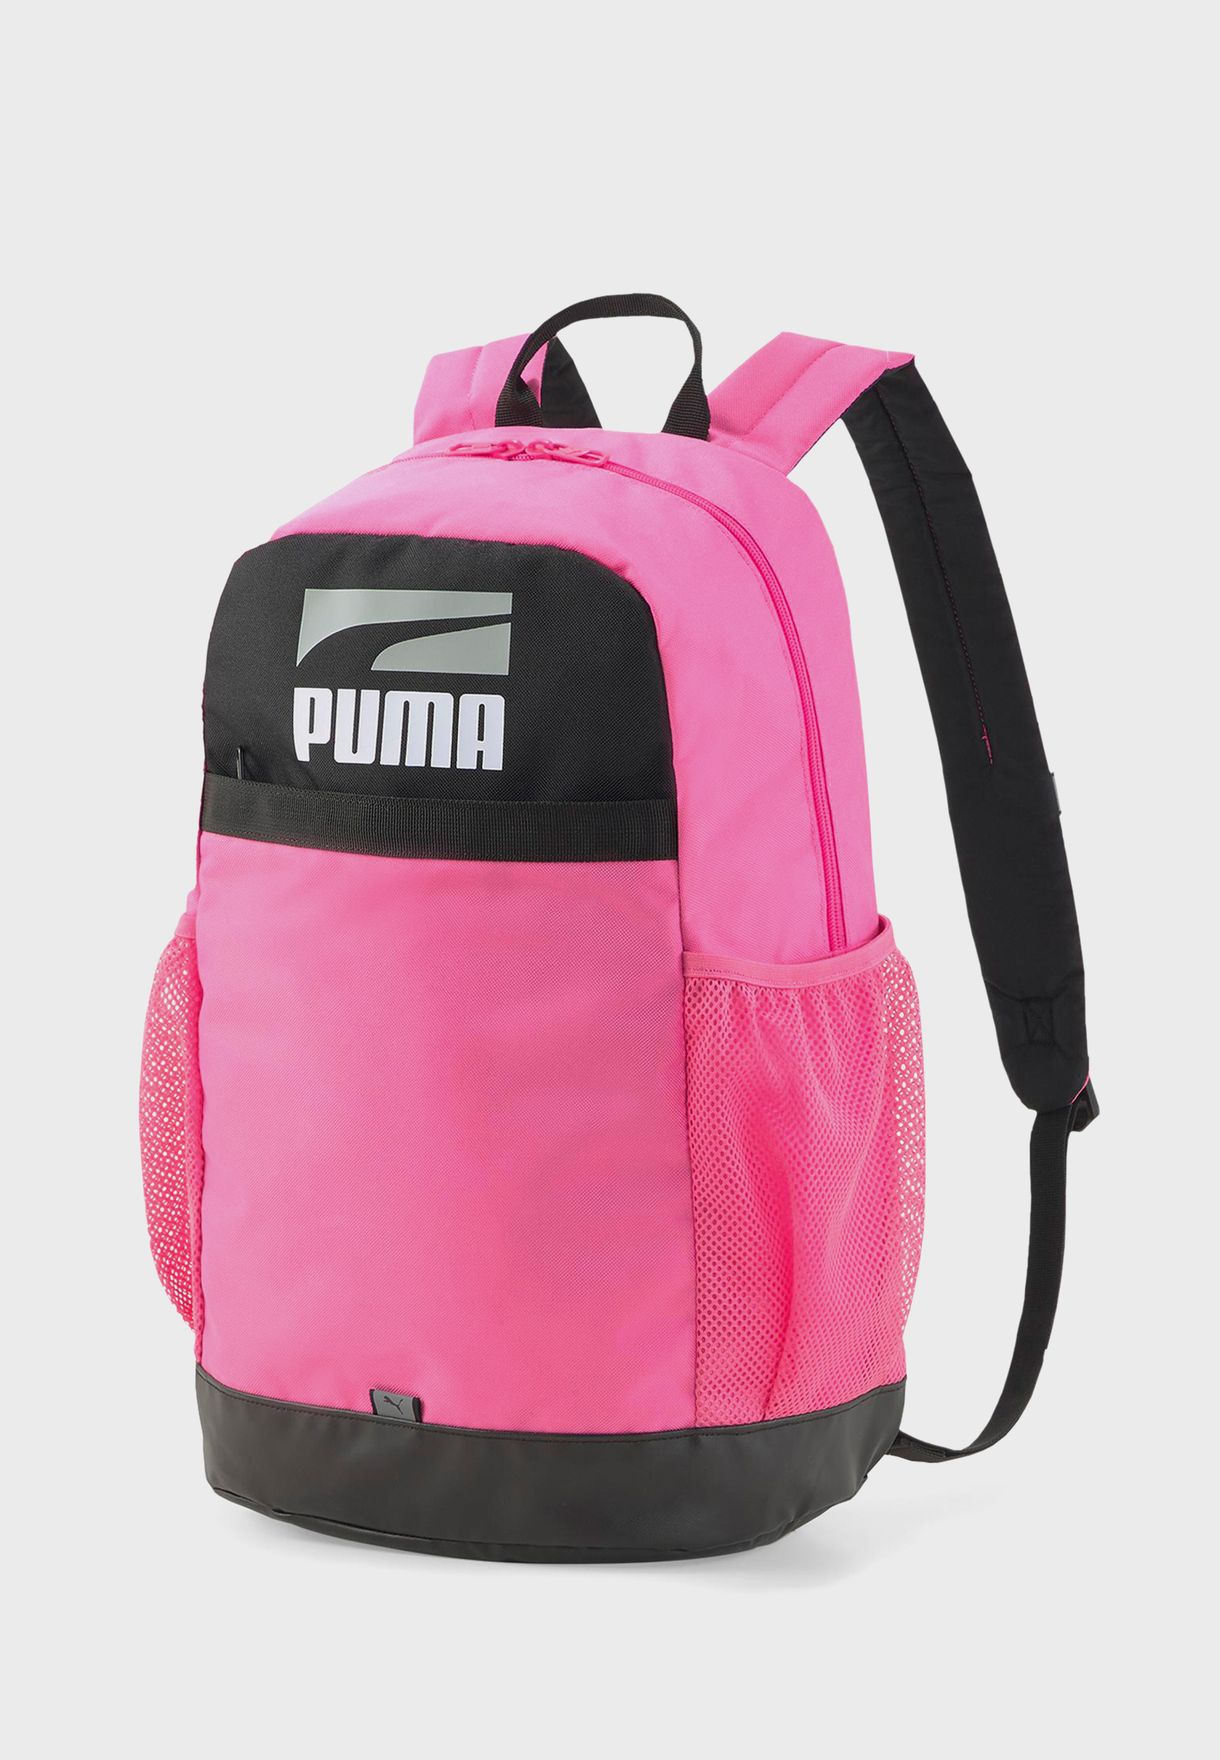 Plus Logo Backpack